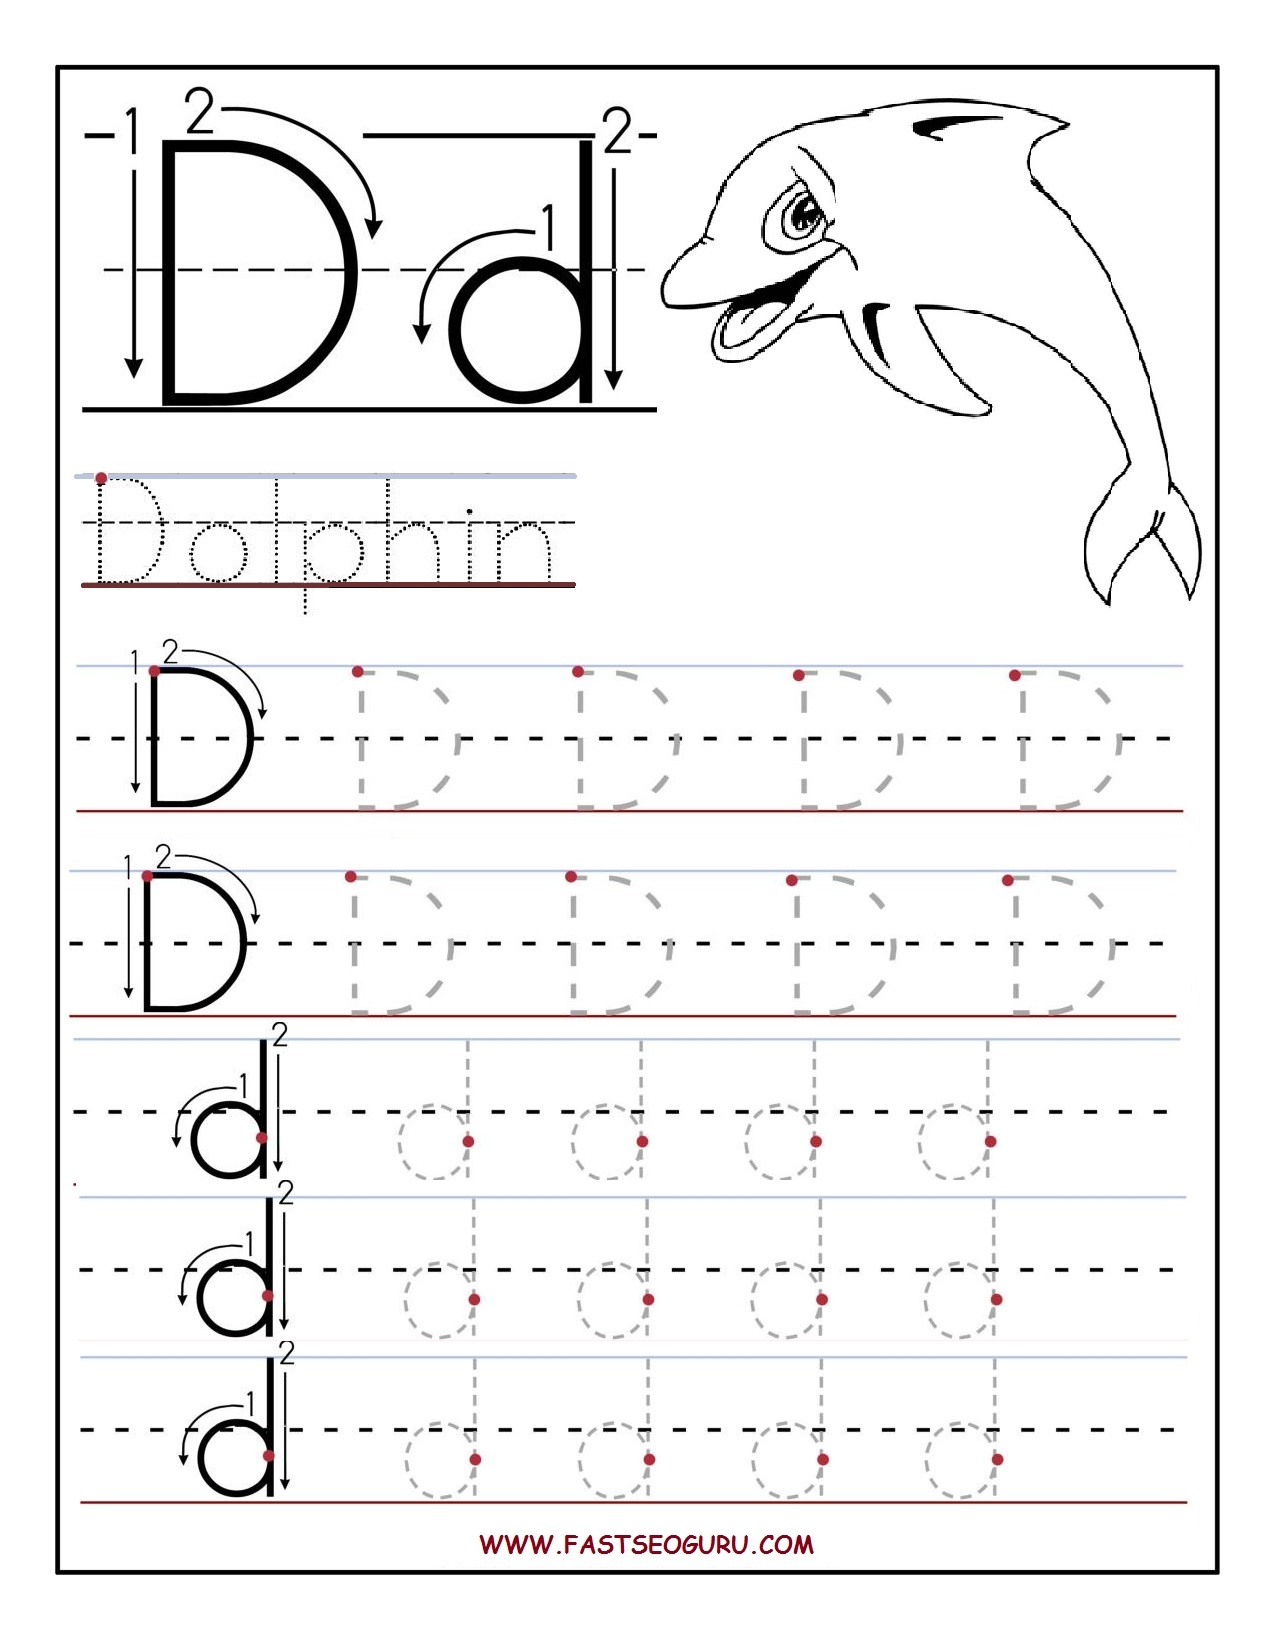 Letter D Tracing Worksheets For Preschoolers